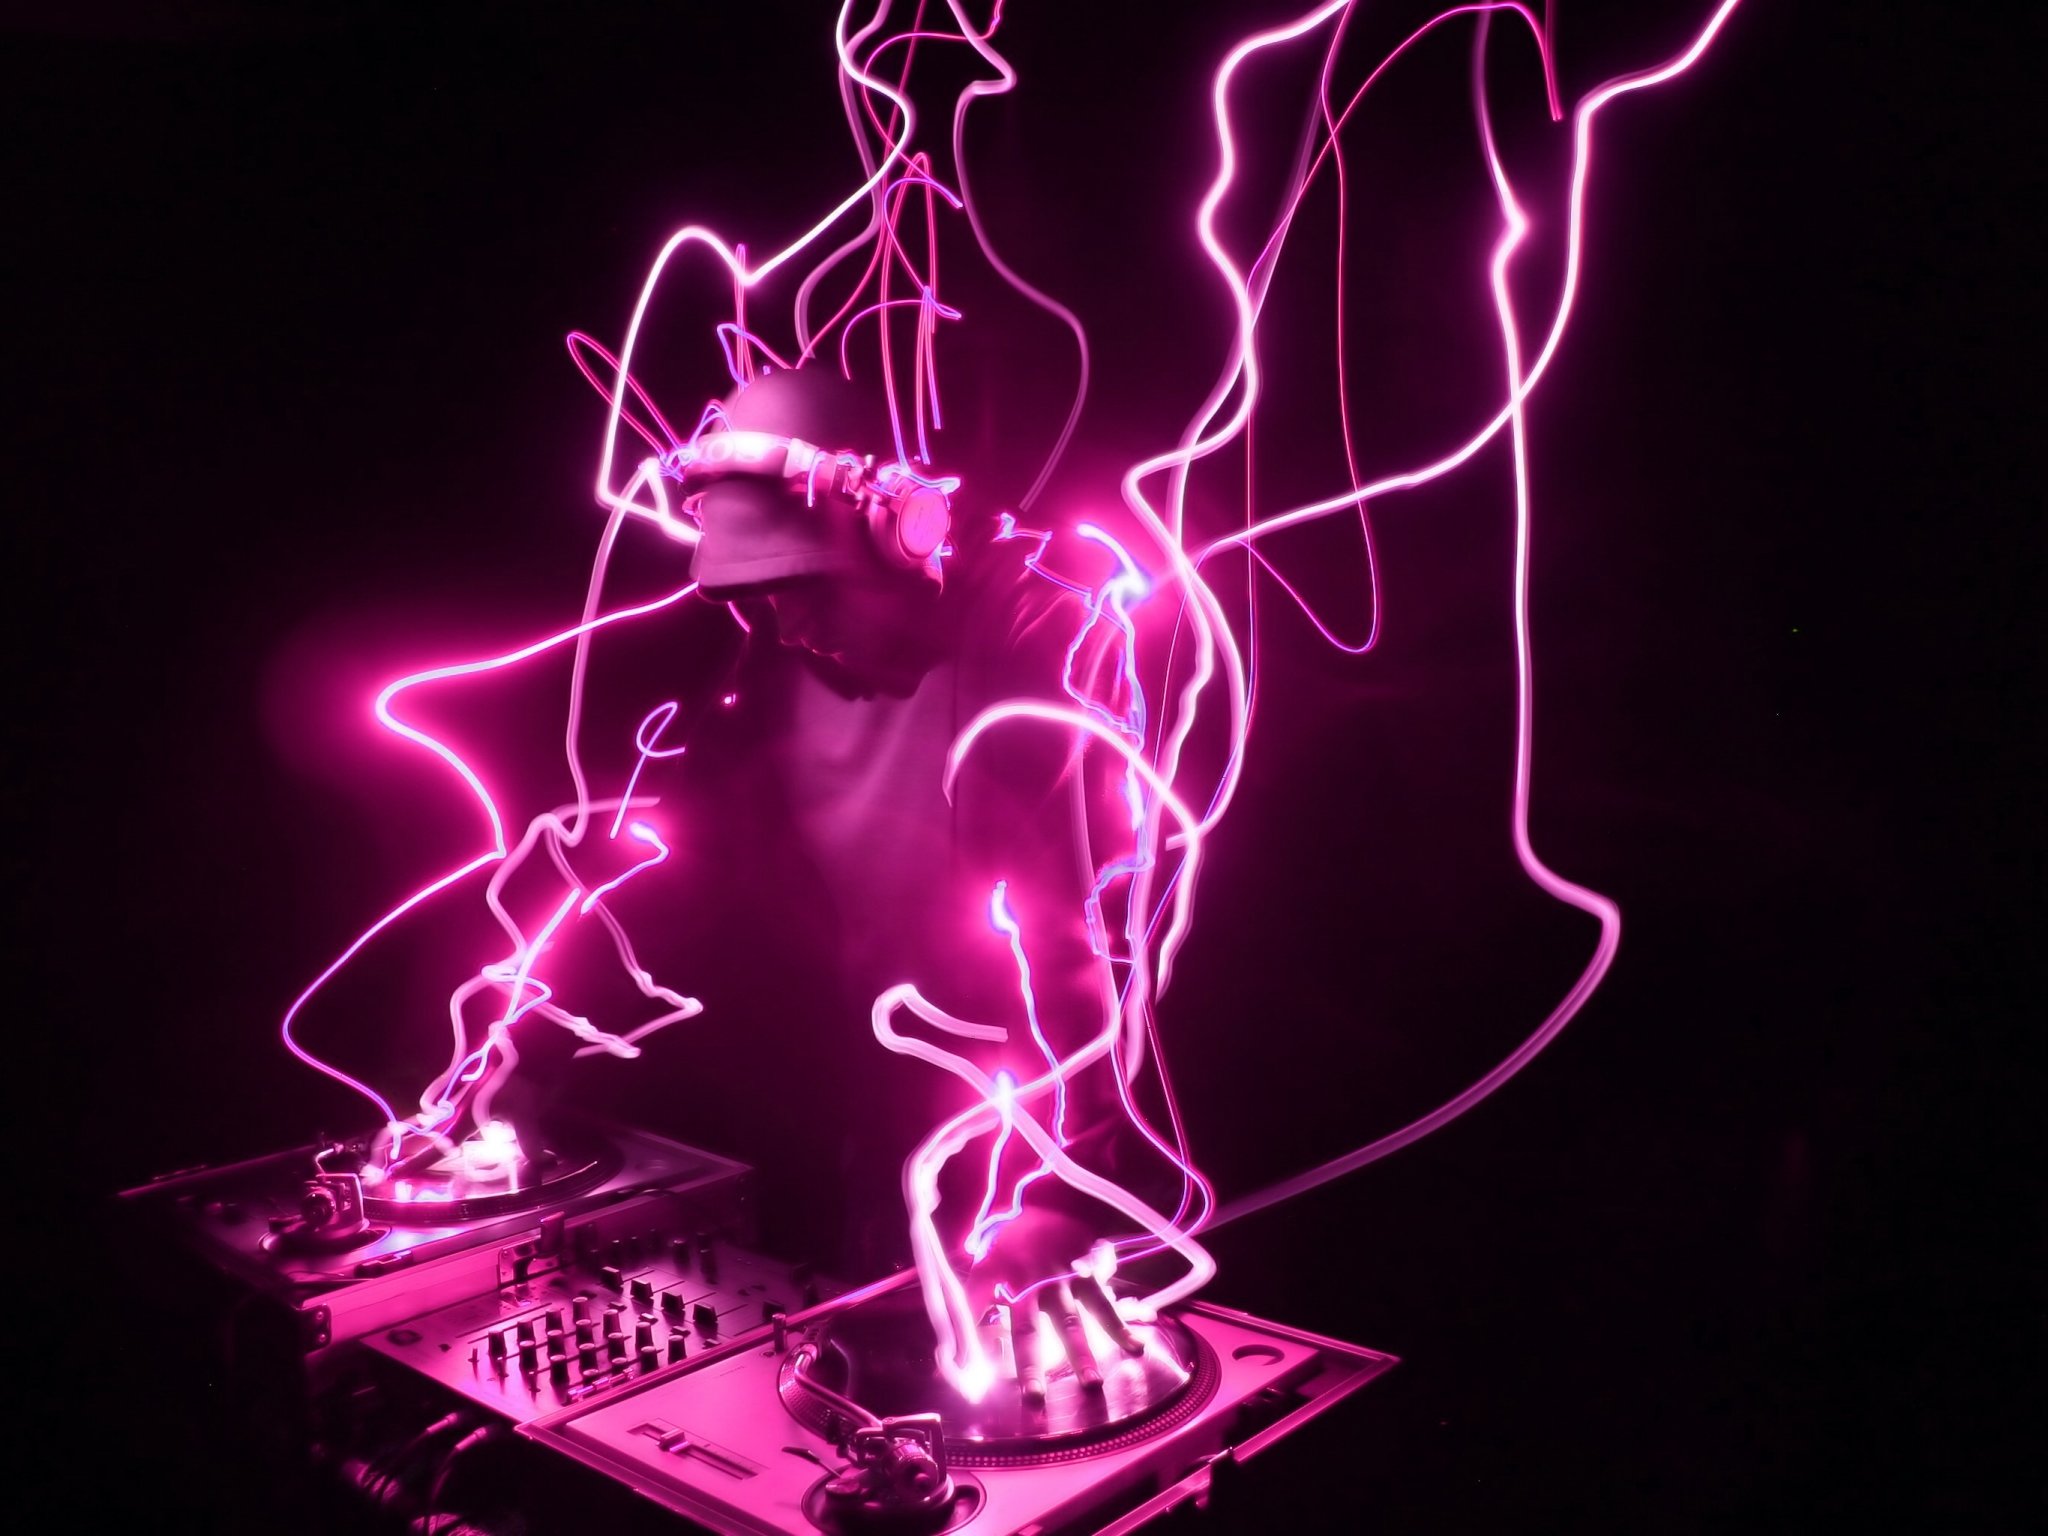 Dance Electro House Edm Disco Electronic Pop Dubstep Hip Hop